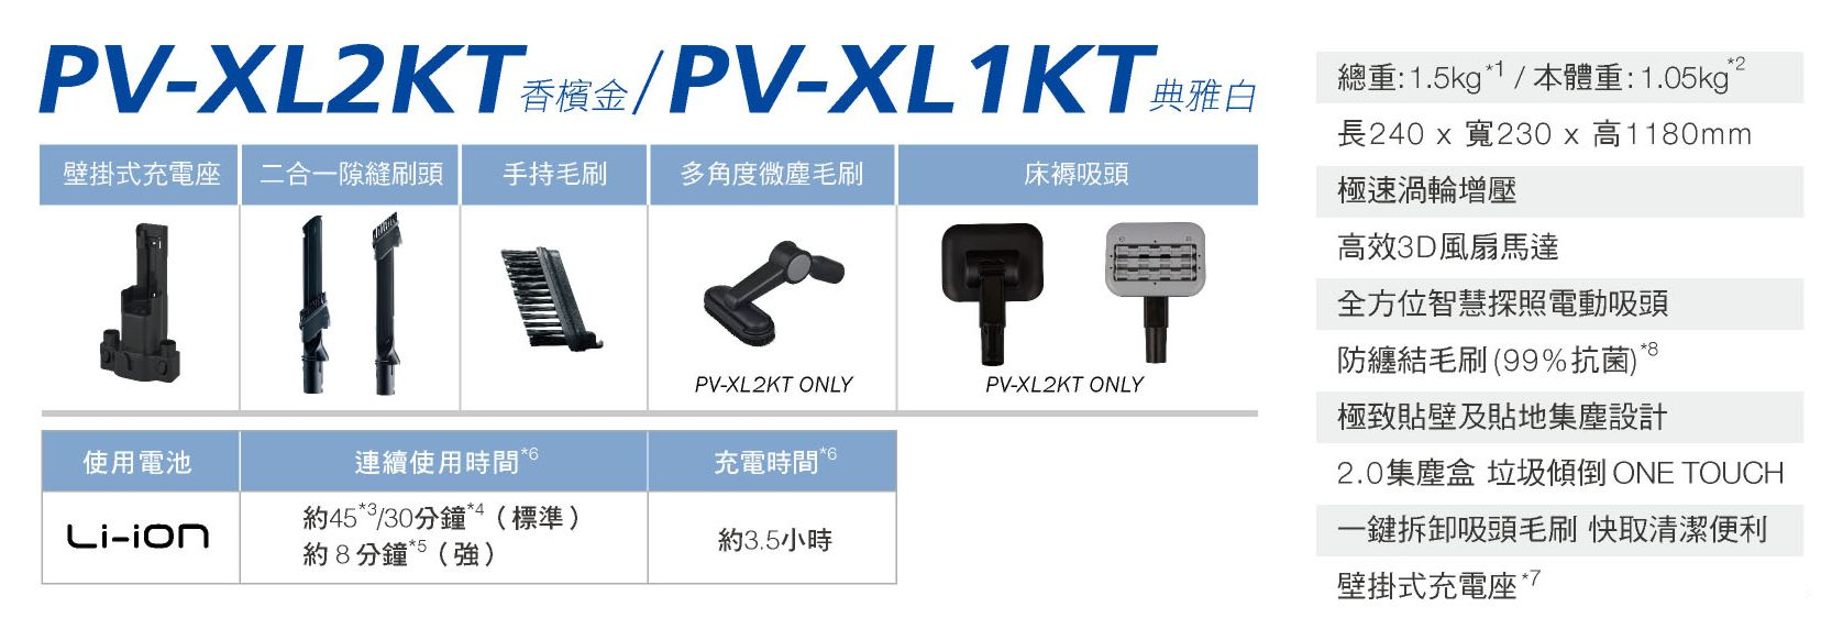 PVXL1KT鋰電池無線吸塵器